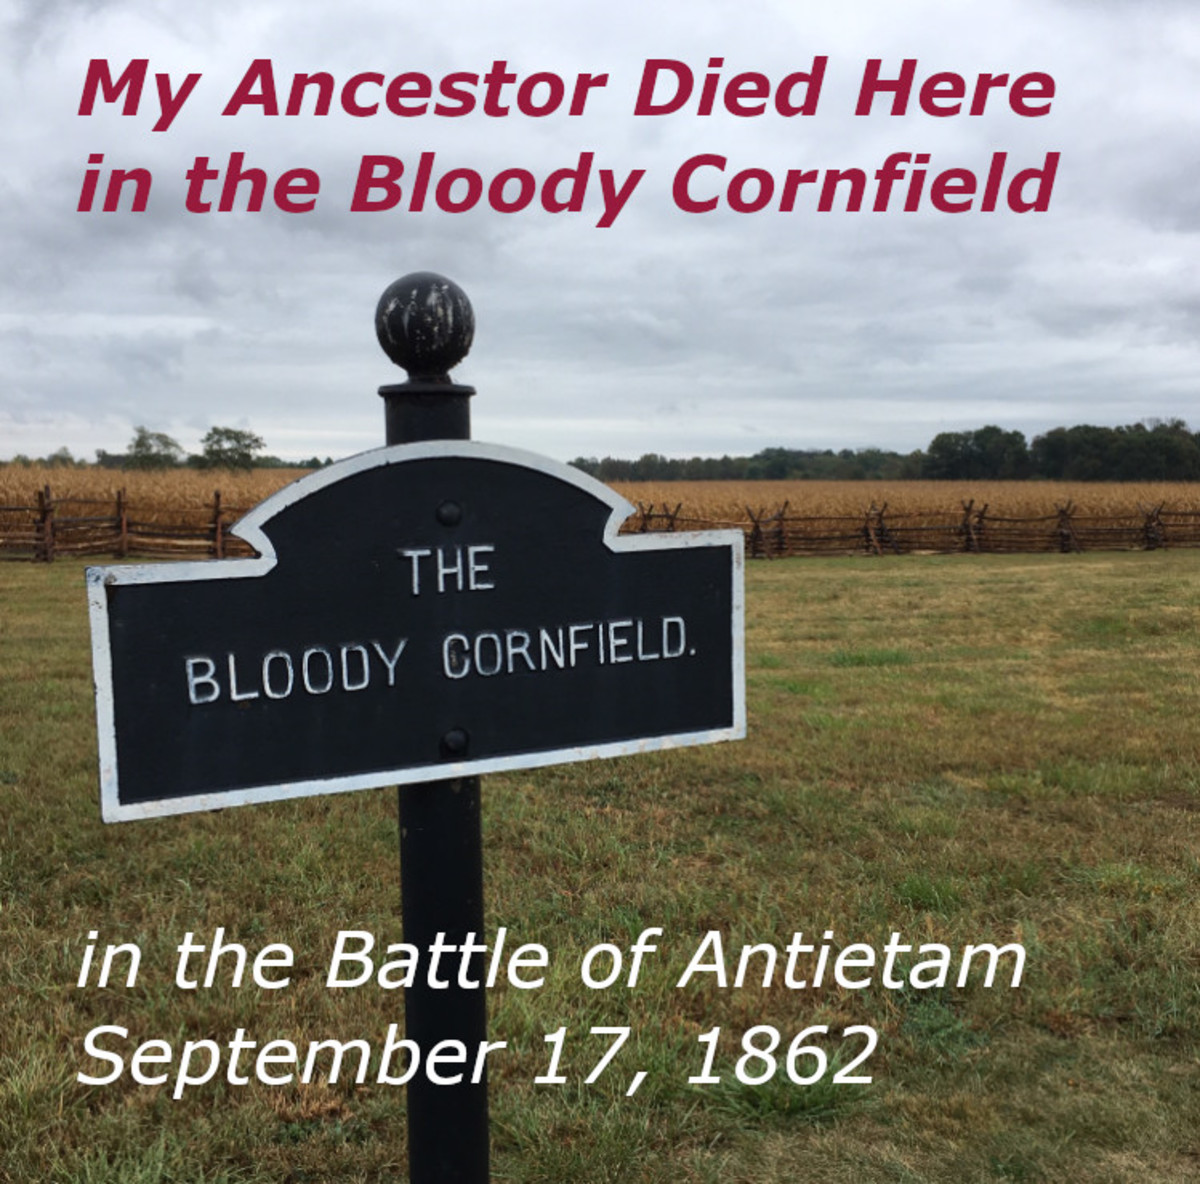 My Ancestor Died in the Bloody Cornfield, Battle of Antietam, September 17, 1862